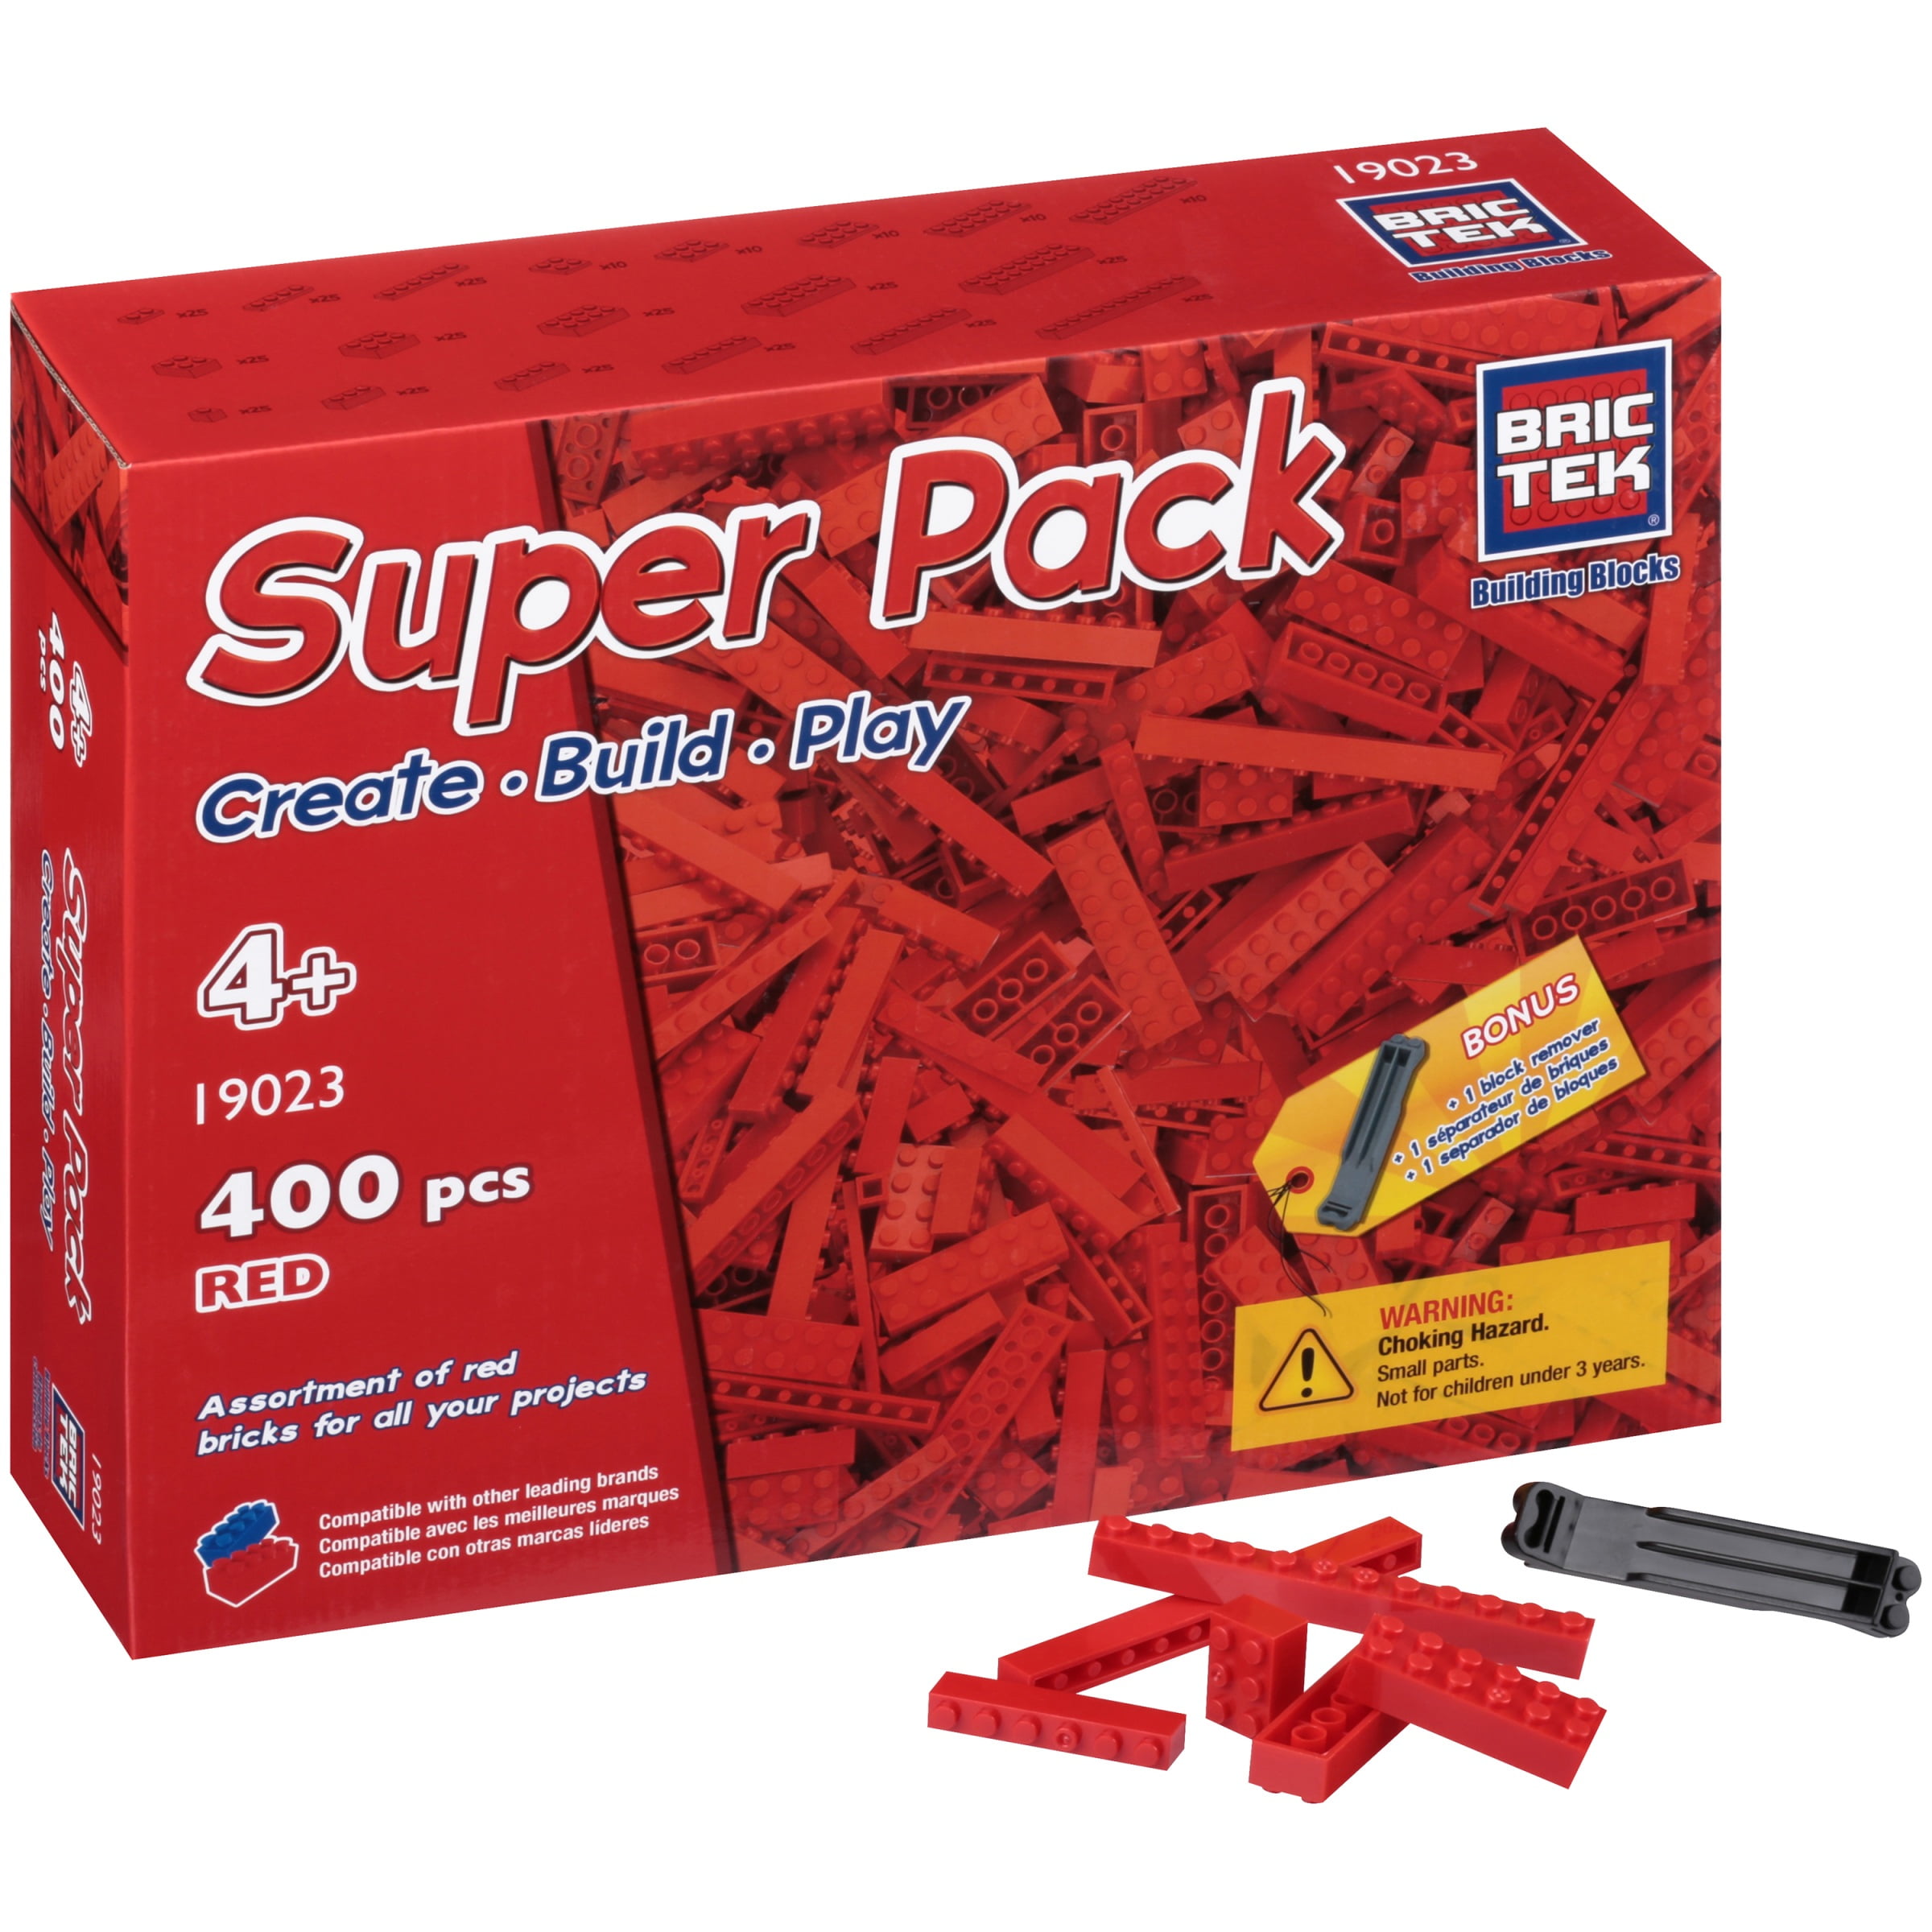 BRICTEK 1,000-Pc Super Pack Building Bricks Set Compatible with Other Leading Brands.